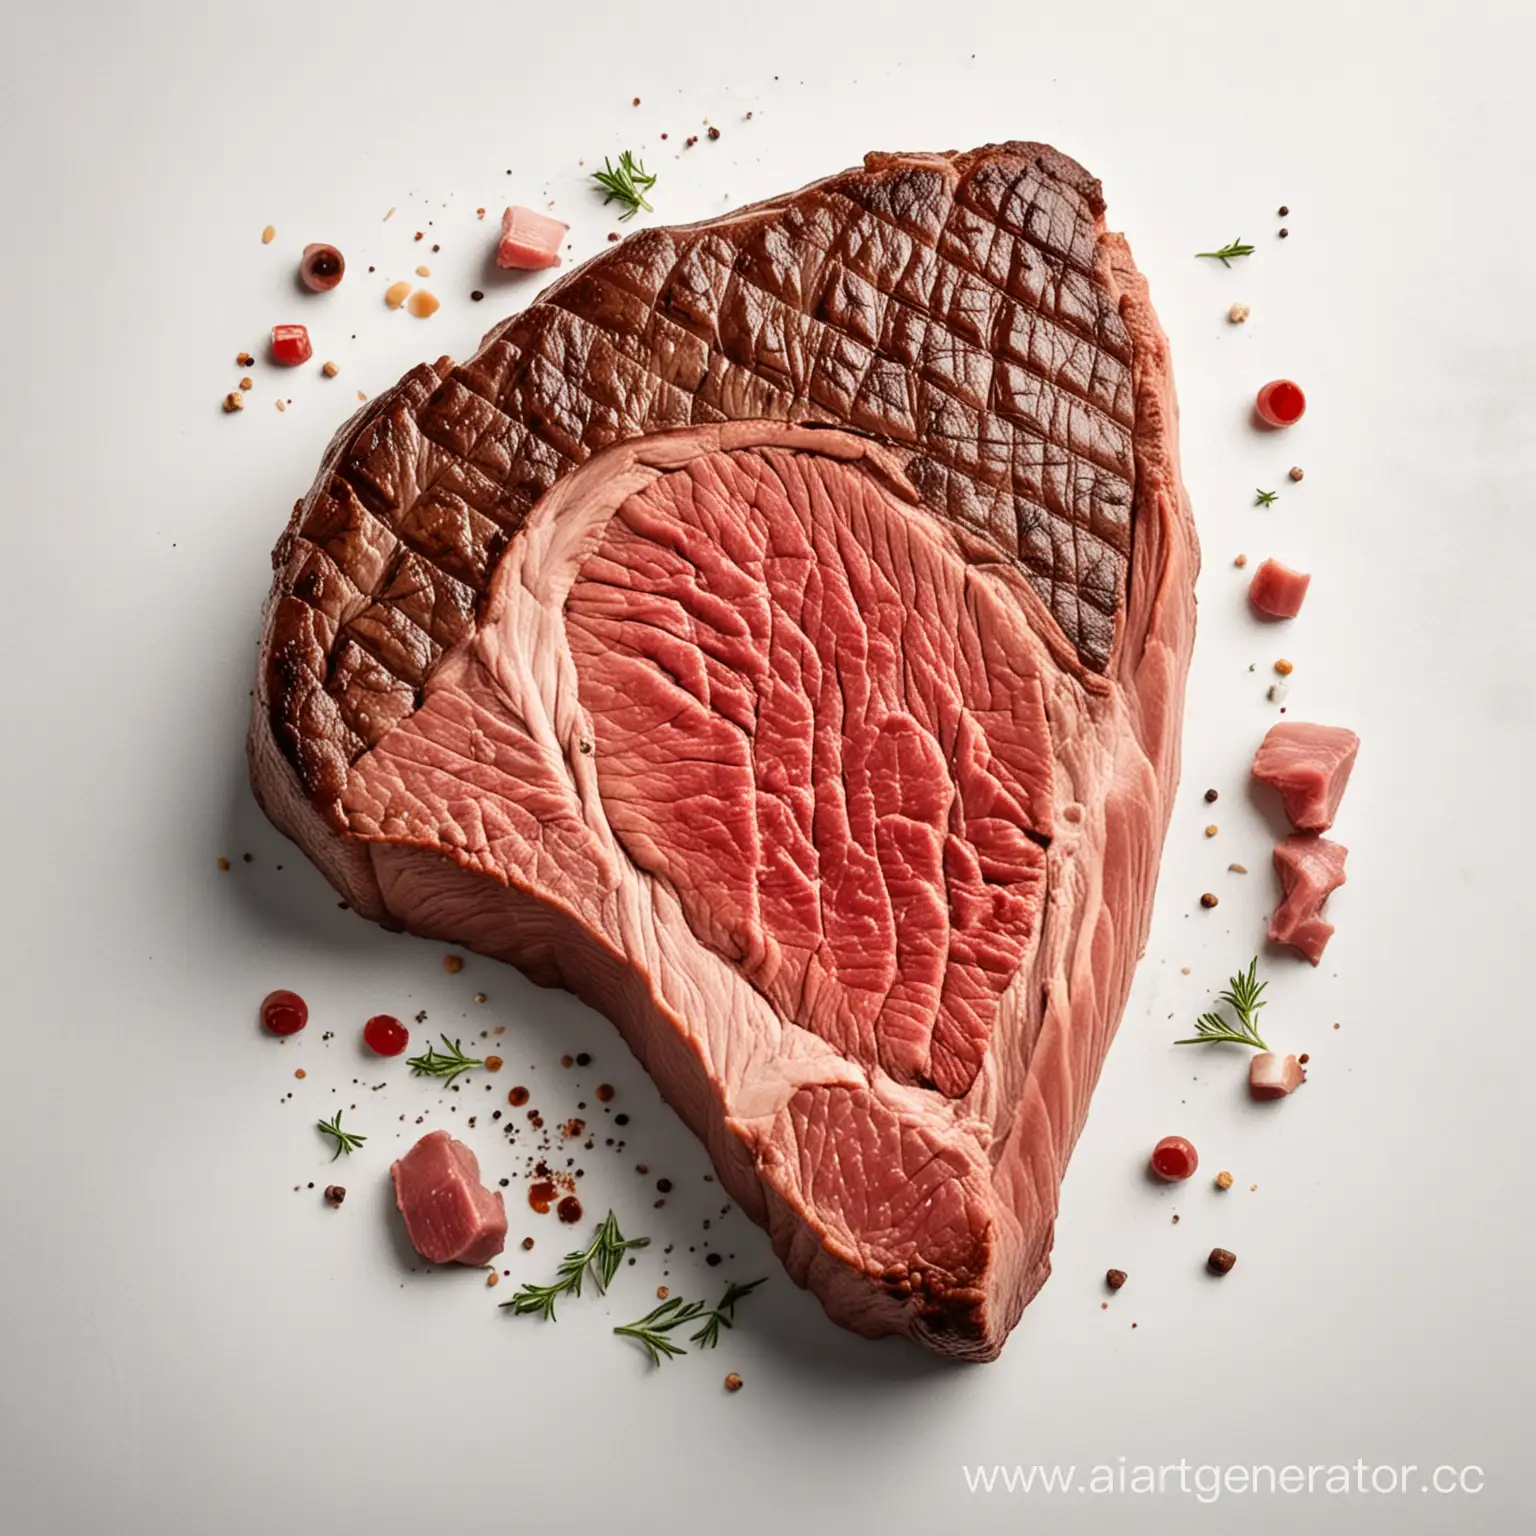 Aesthetic-Steak-Presentation-Juicy-Steak-on-Clean-White-Background